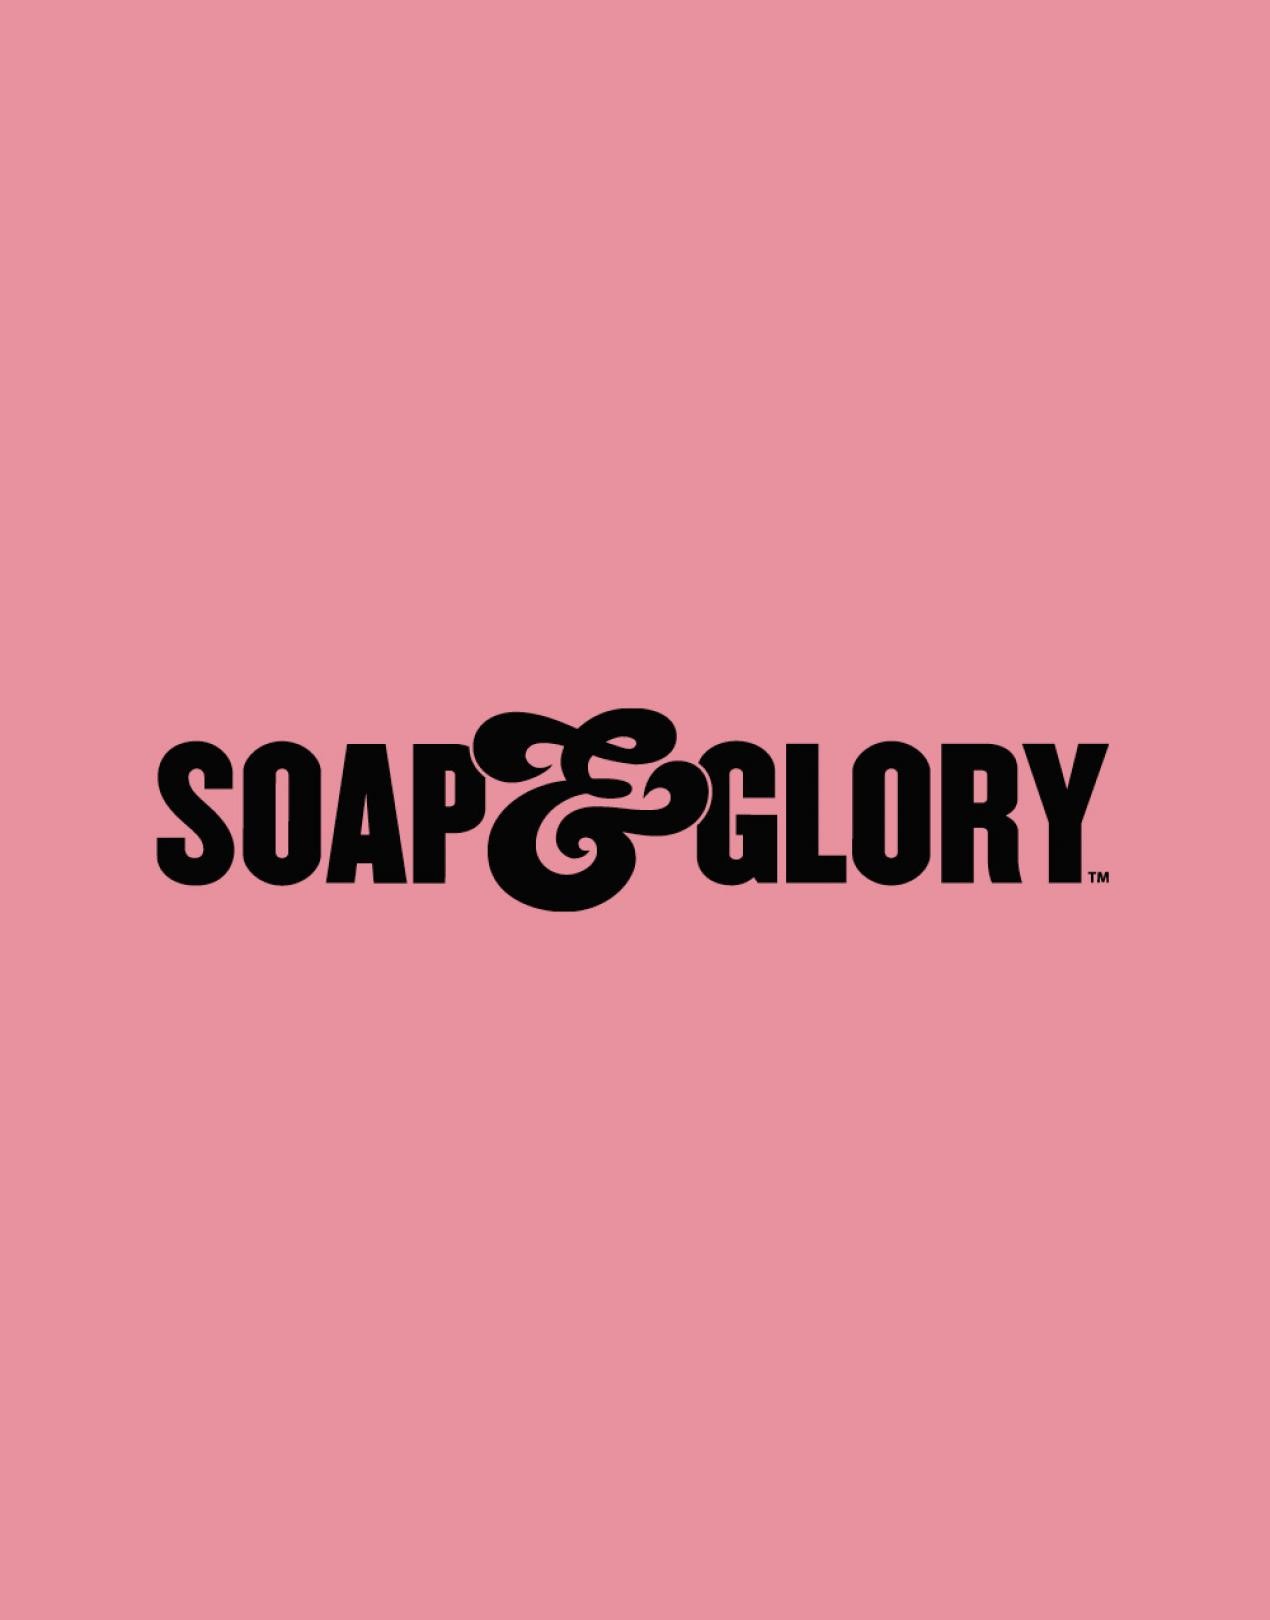 Black Soap & Glory Logo on Pink Background